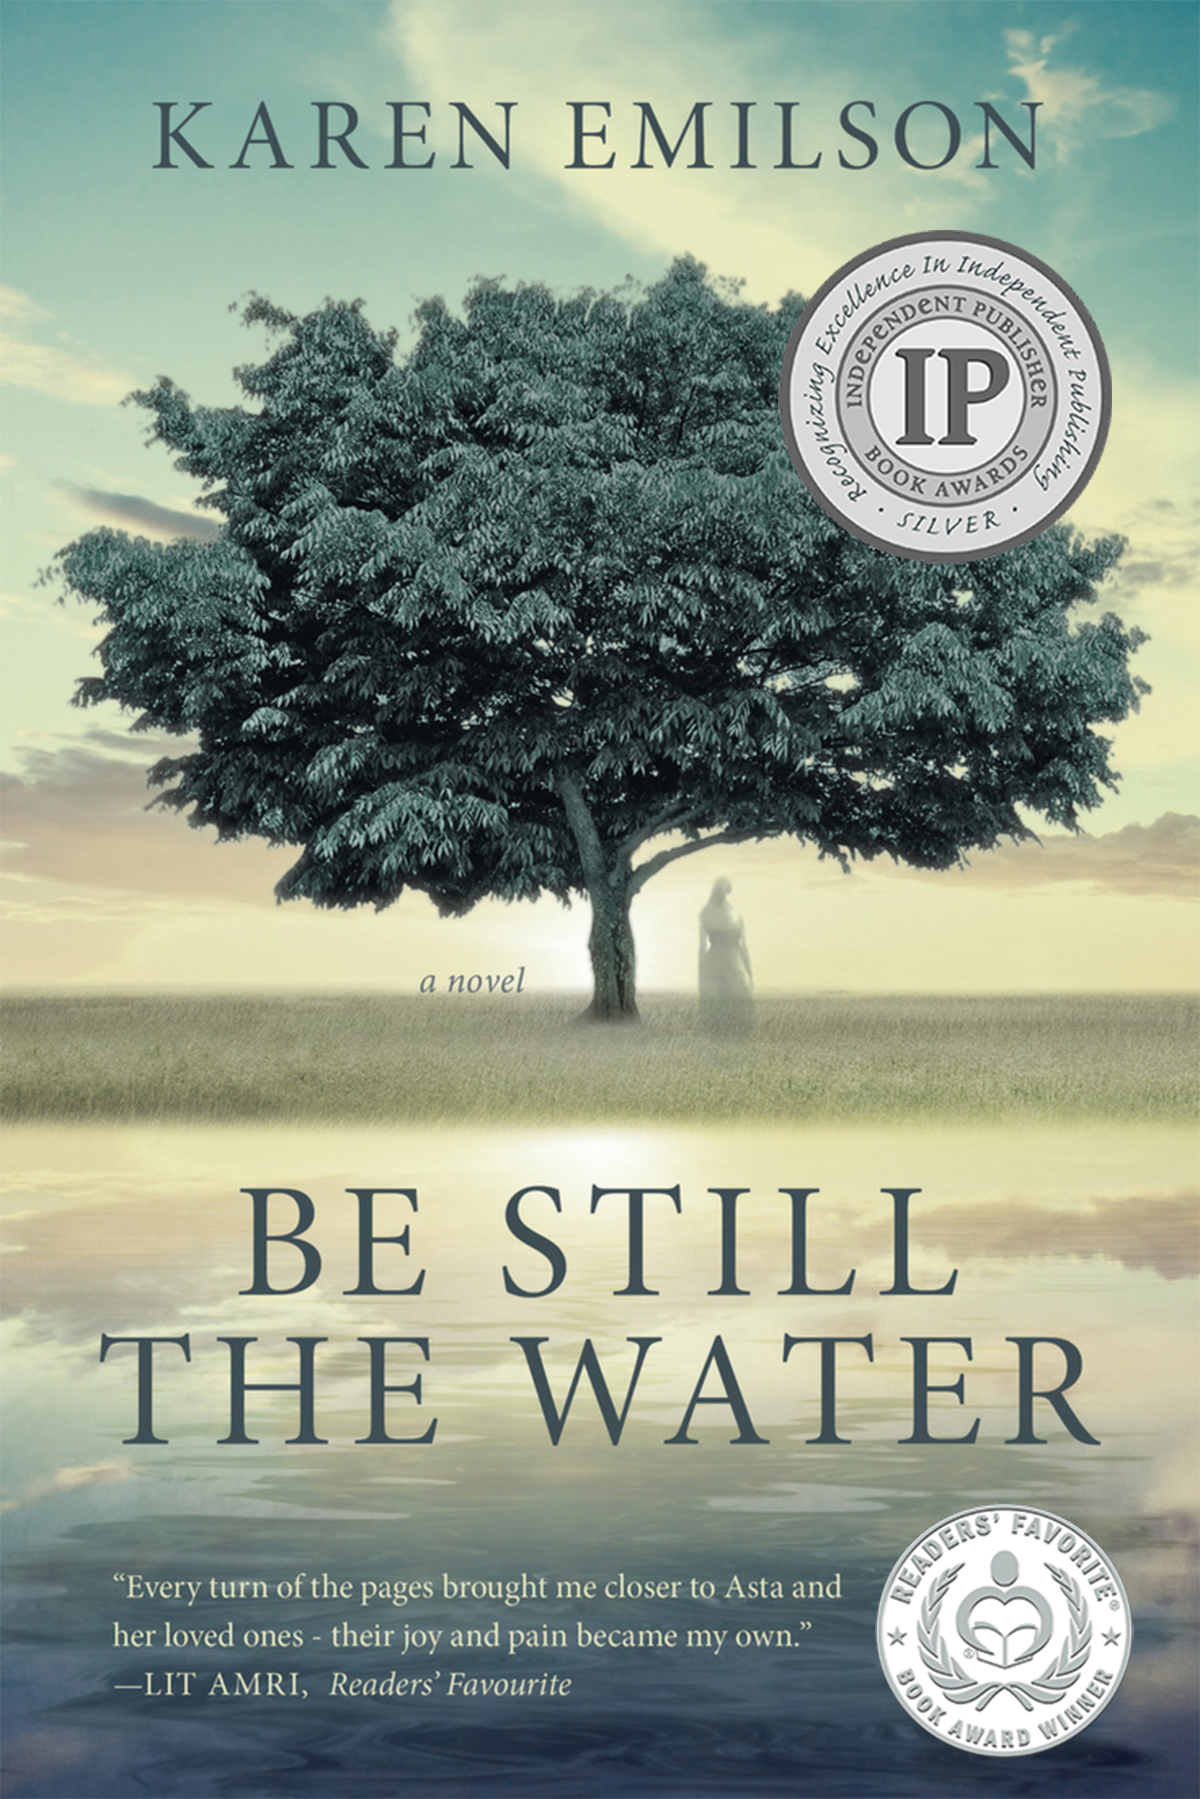 FREE: Be Still the Water by Karen Emilson